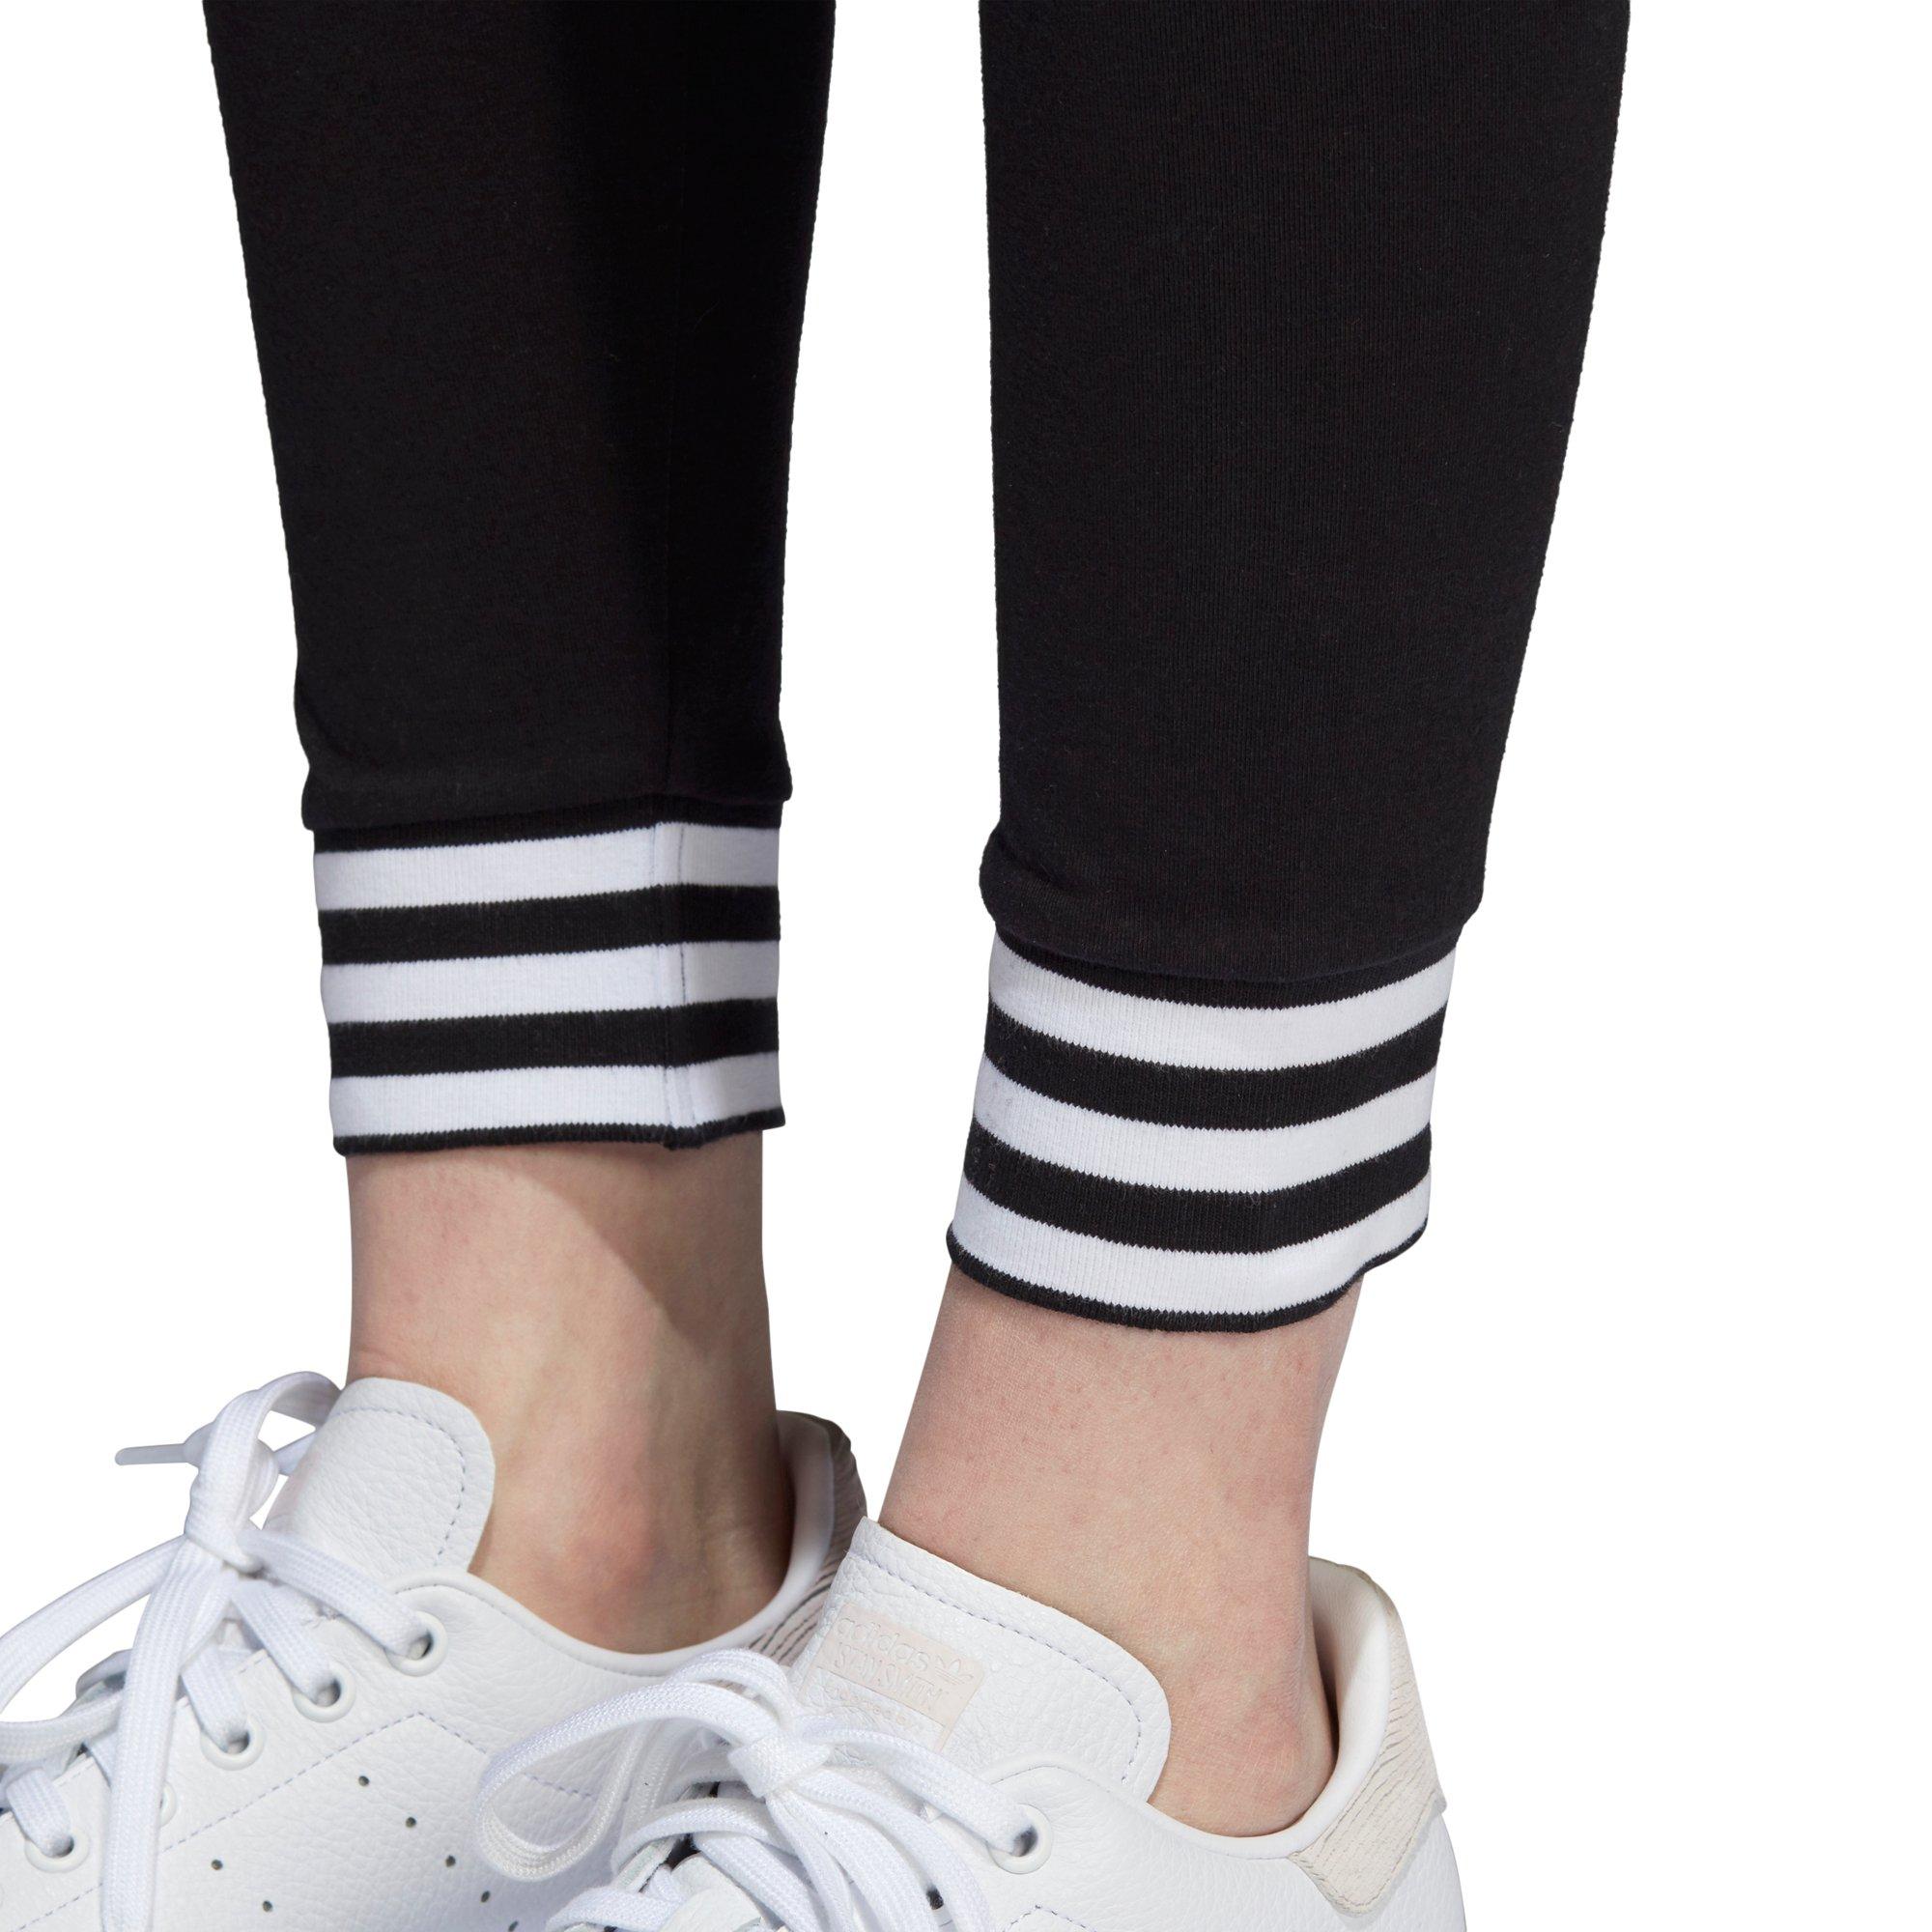 adidas originals leggings with striped cuffs in black